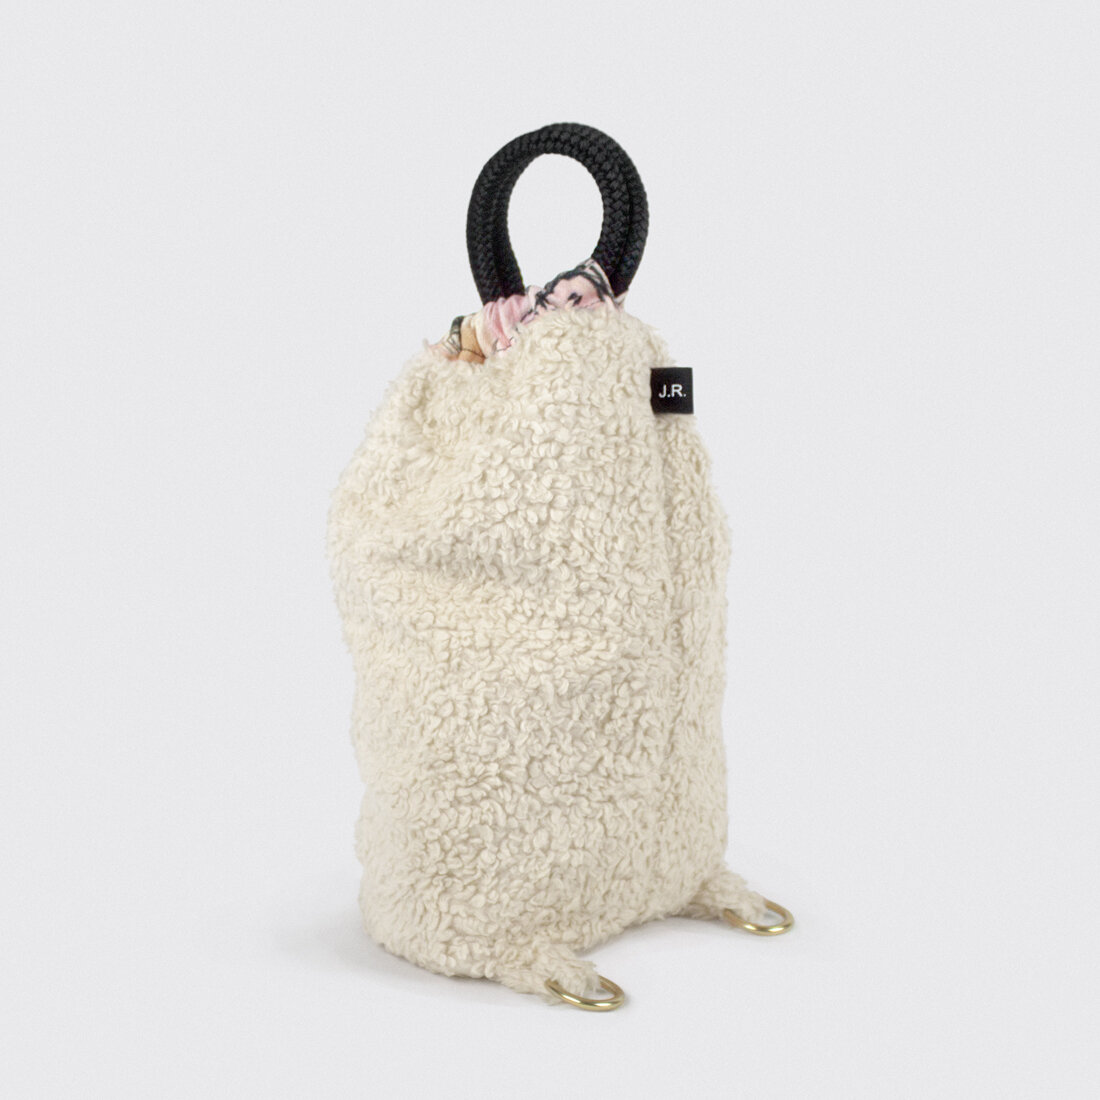 Jonny Ruzzo — Shop — Handmade Canvas Backpack - Caramel with Navy Rubber  Coating